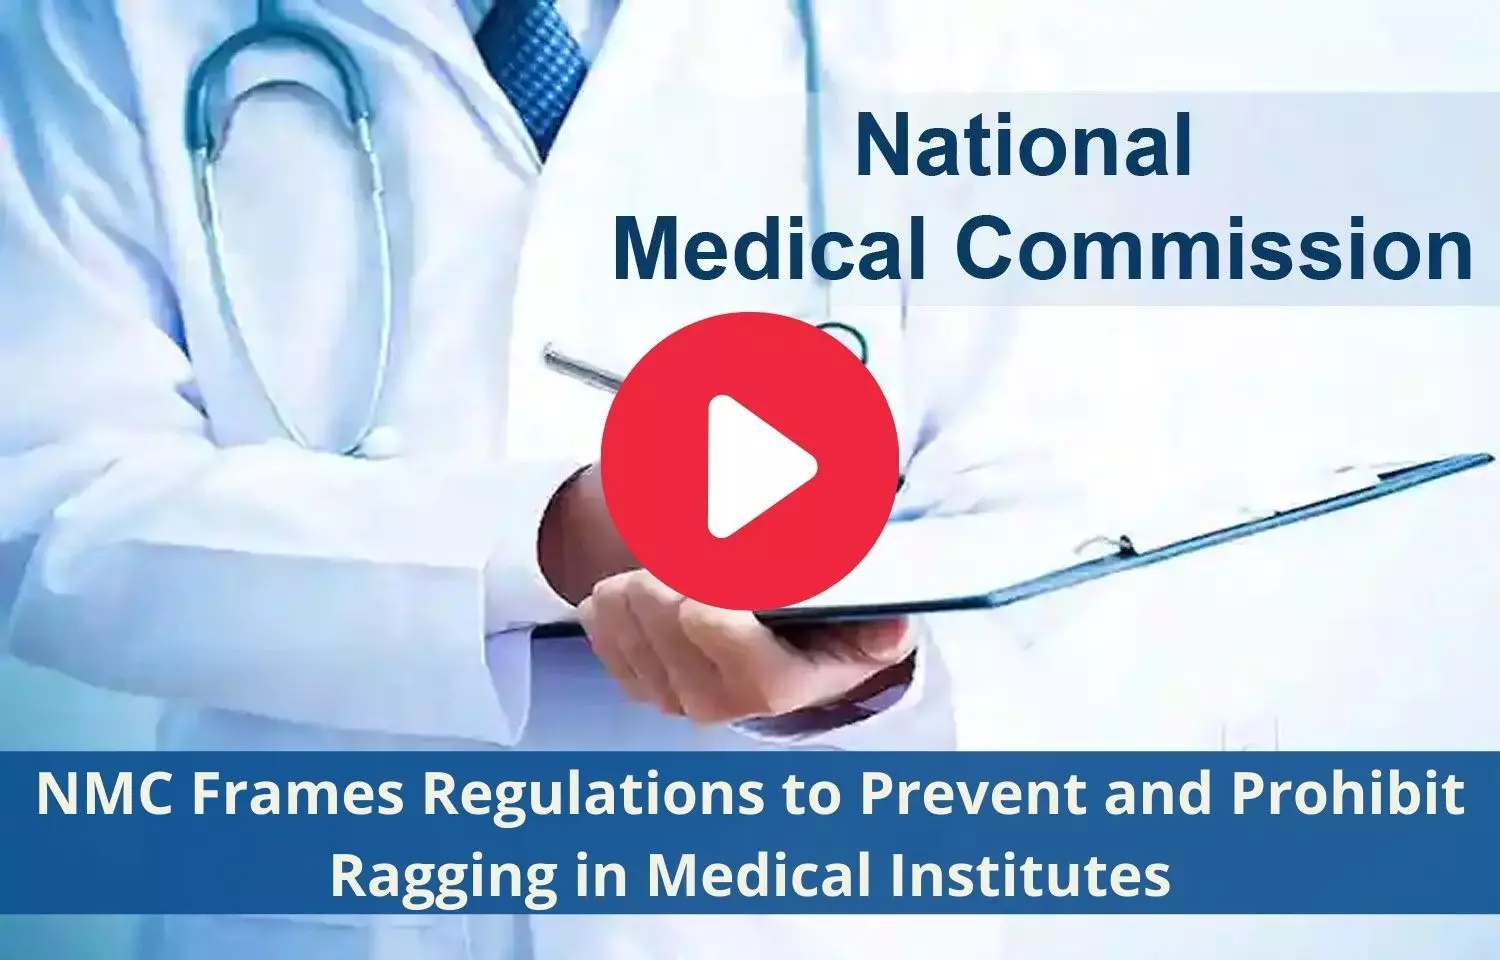 NMC frames regulations to prevent, prohibit ragging in medical institutes